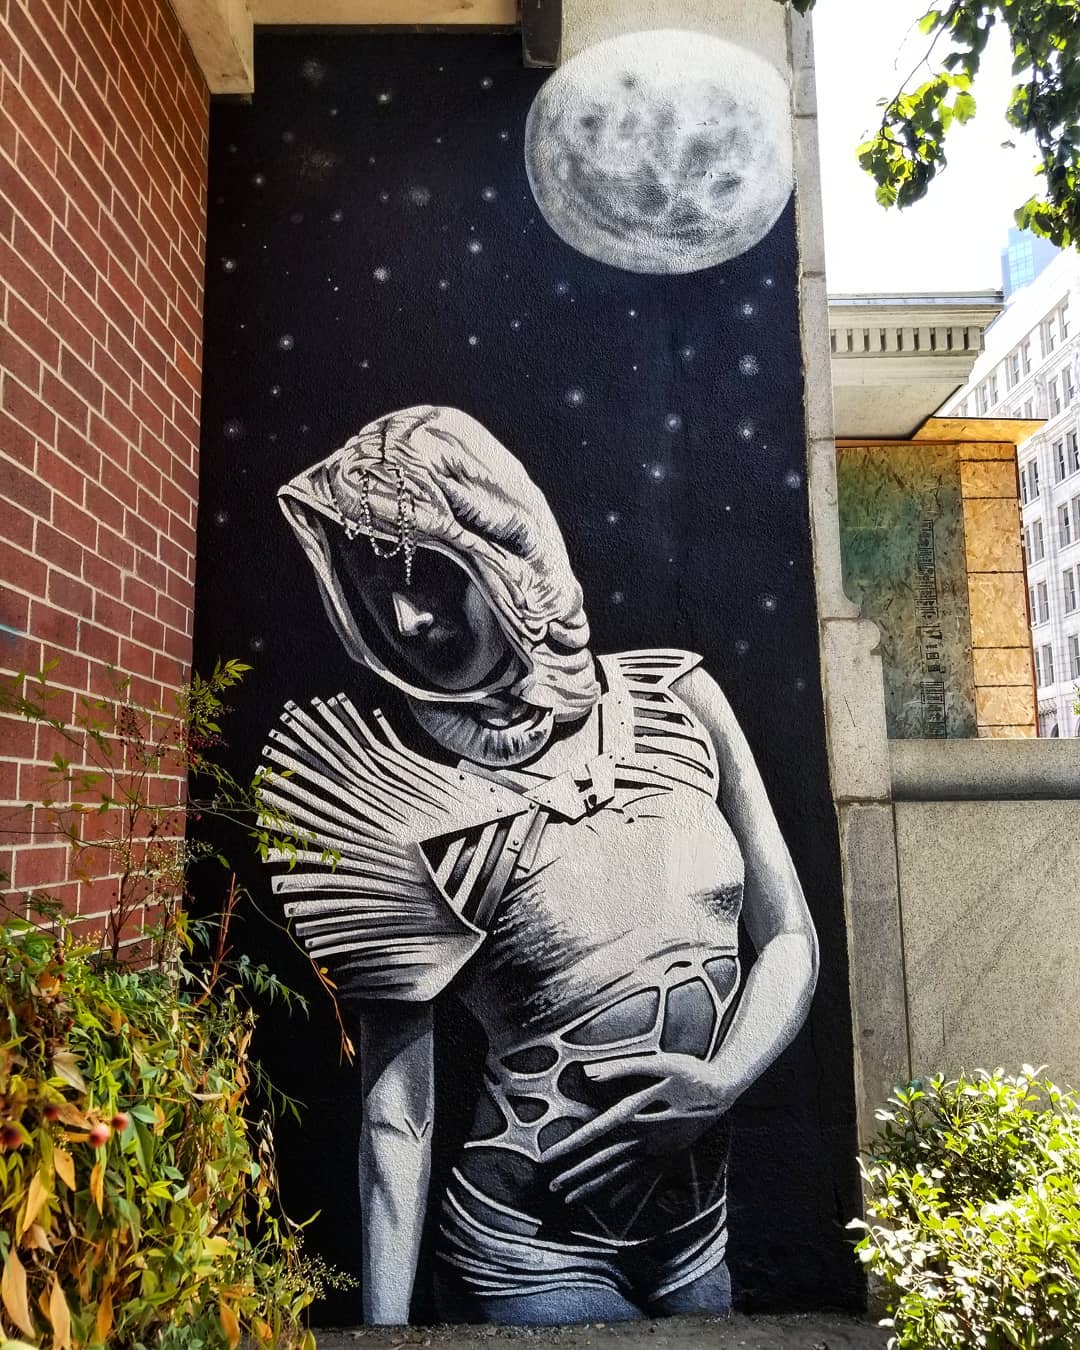 mural in Sacramento by artist Monty Guy.